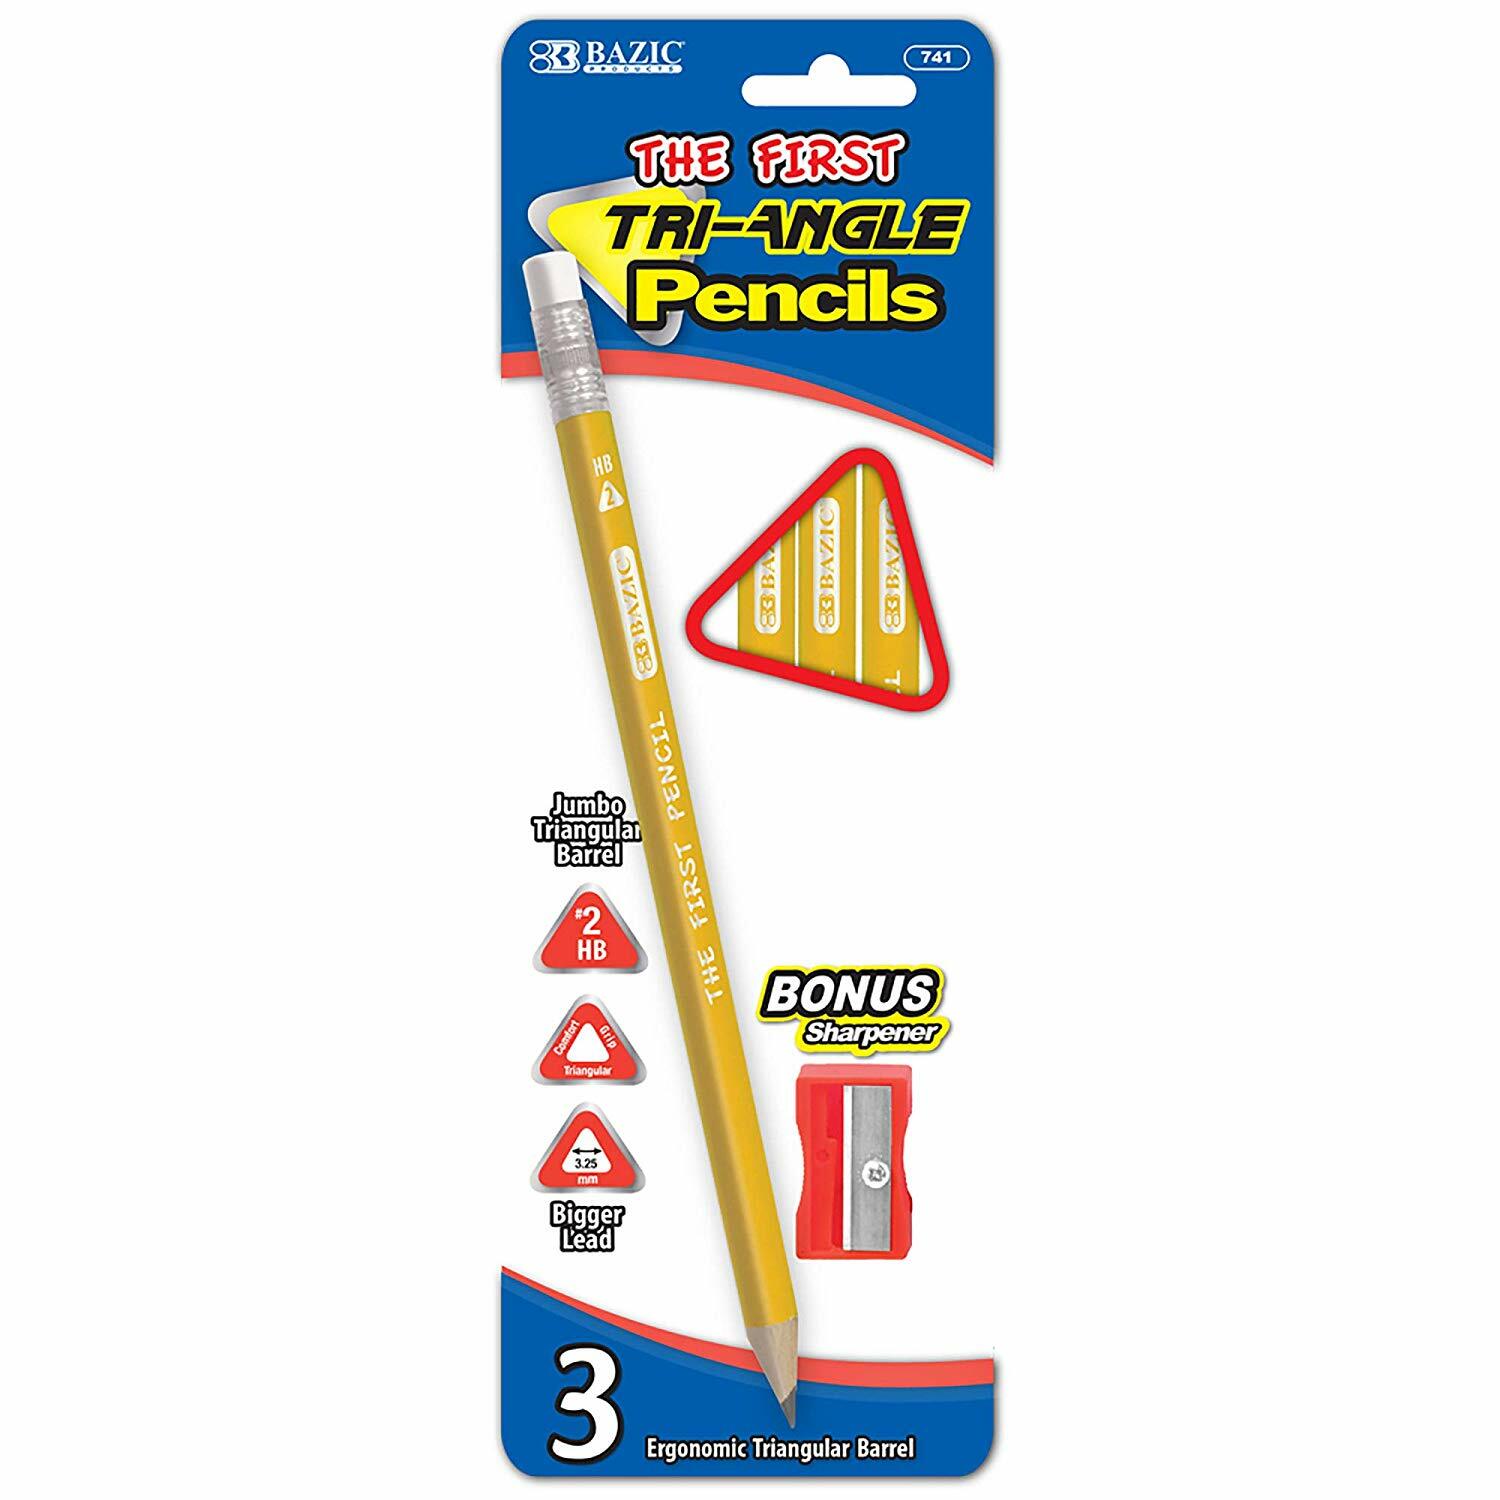 Pencil Triangle/Jumbo (BAZ 741)